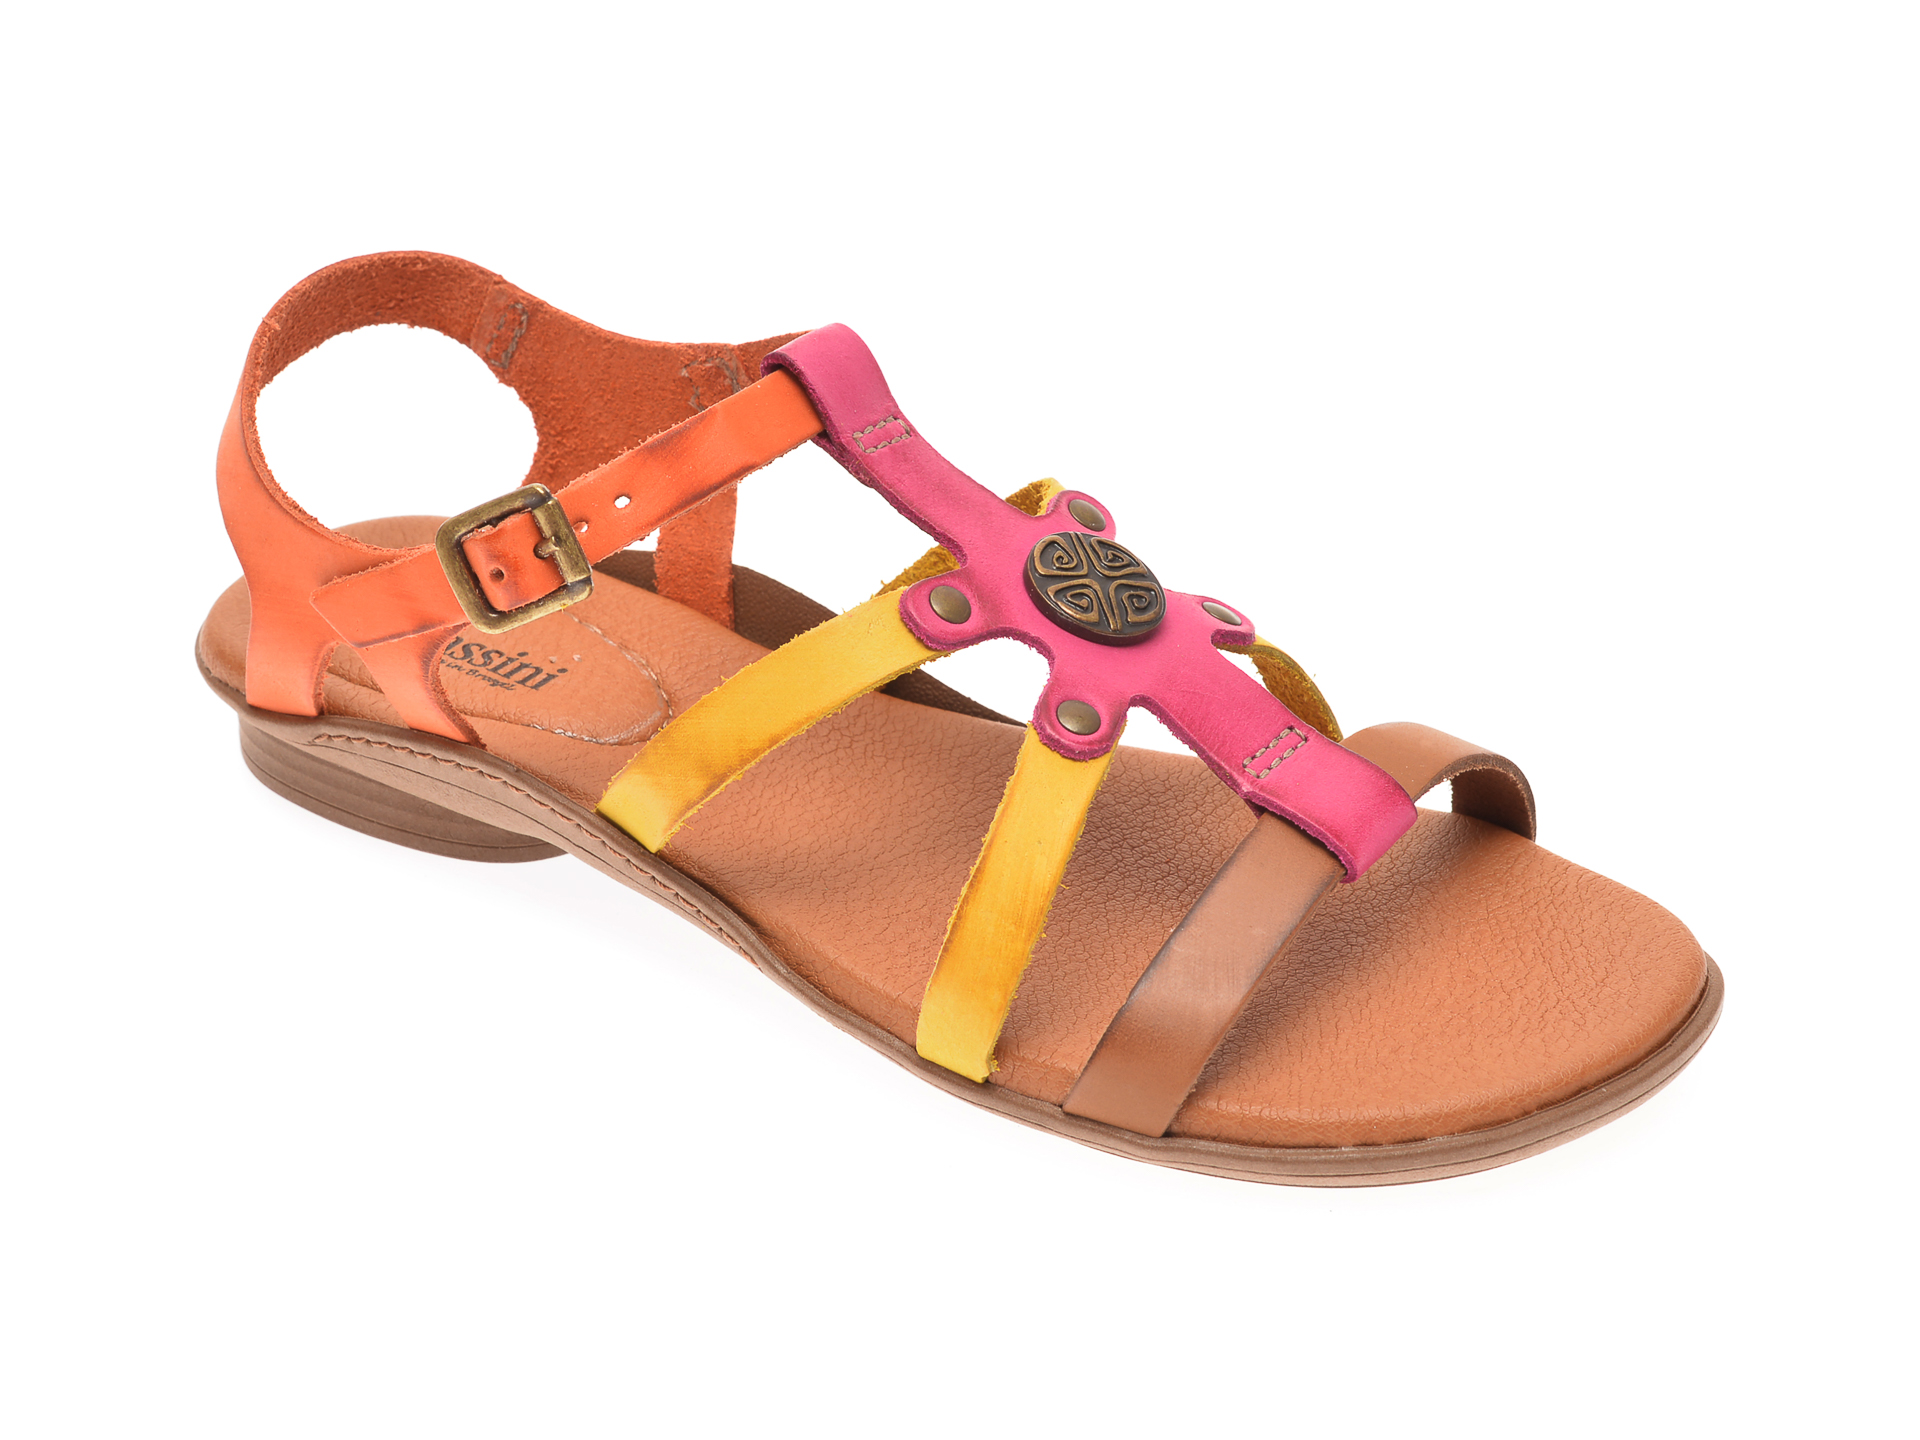 Sandale FLAVIA PASSINI multicolore, 37306, din piele naturala